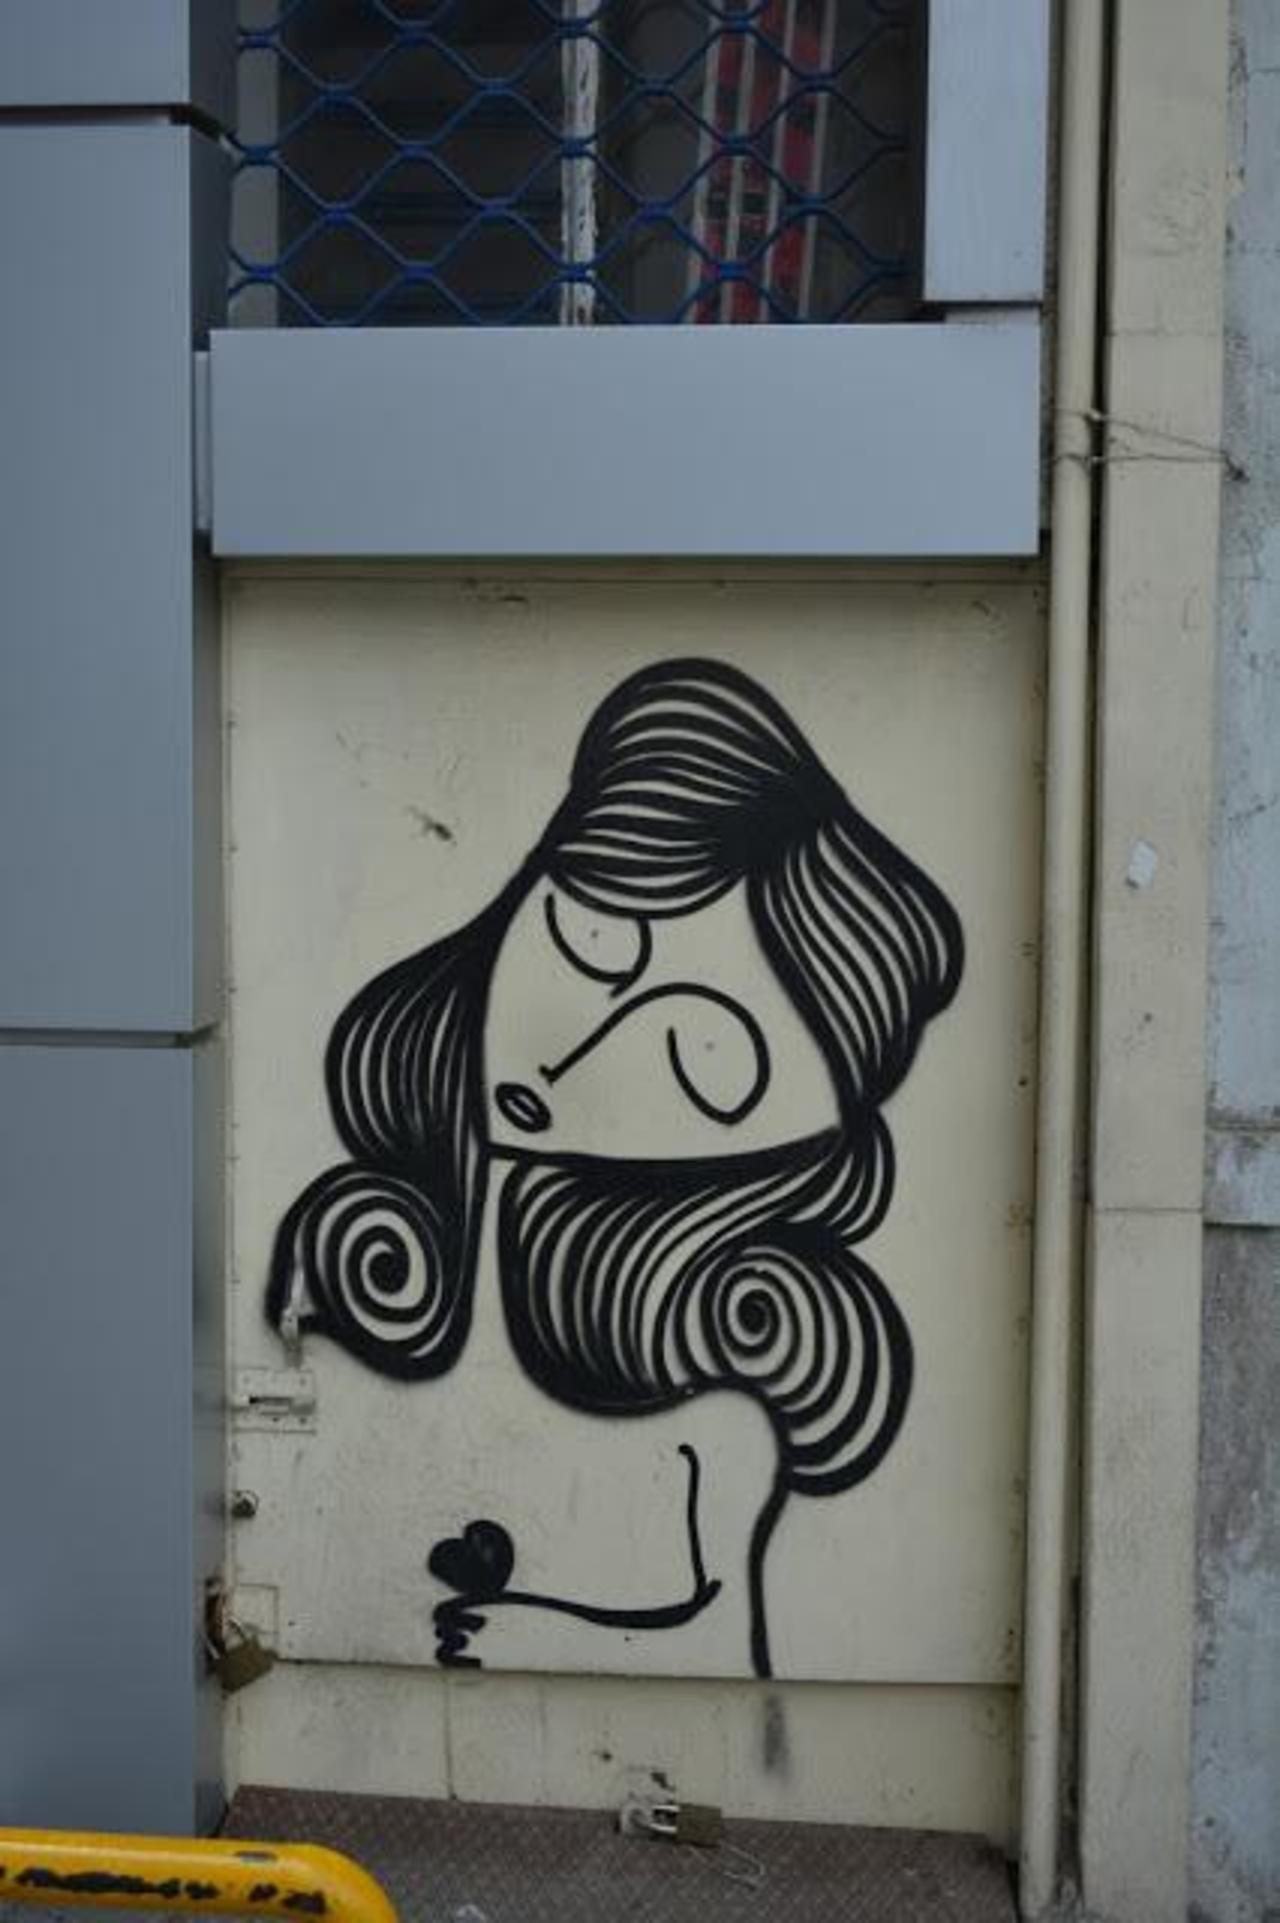 #Repost #art #StreetArt #graffiti #Athens

If you want to see more, visit my blog
http://streetartph0t0s.blogspot.gr/

 https://t.co/HQuuCxw7aU